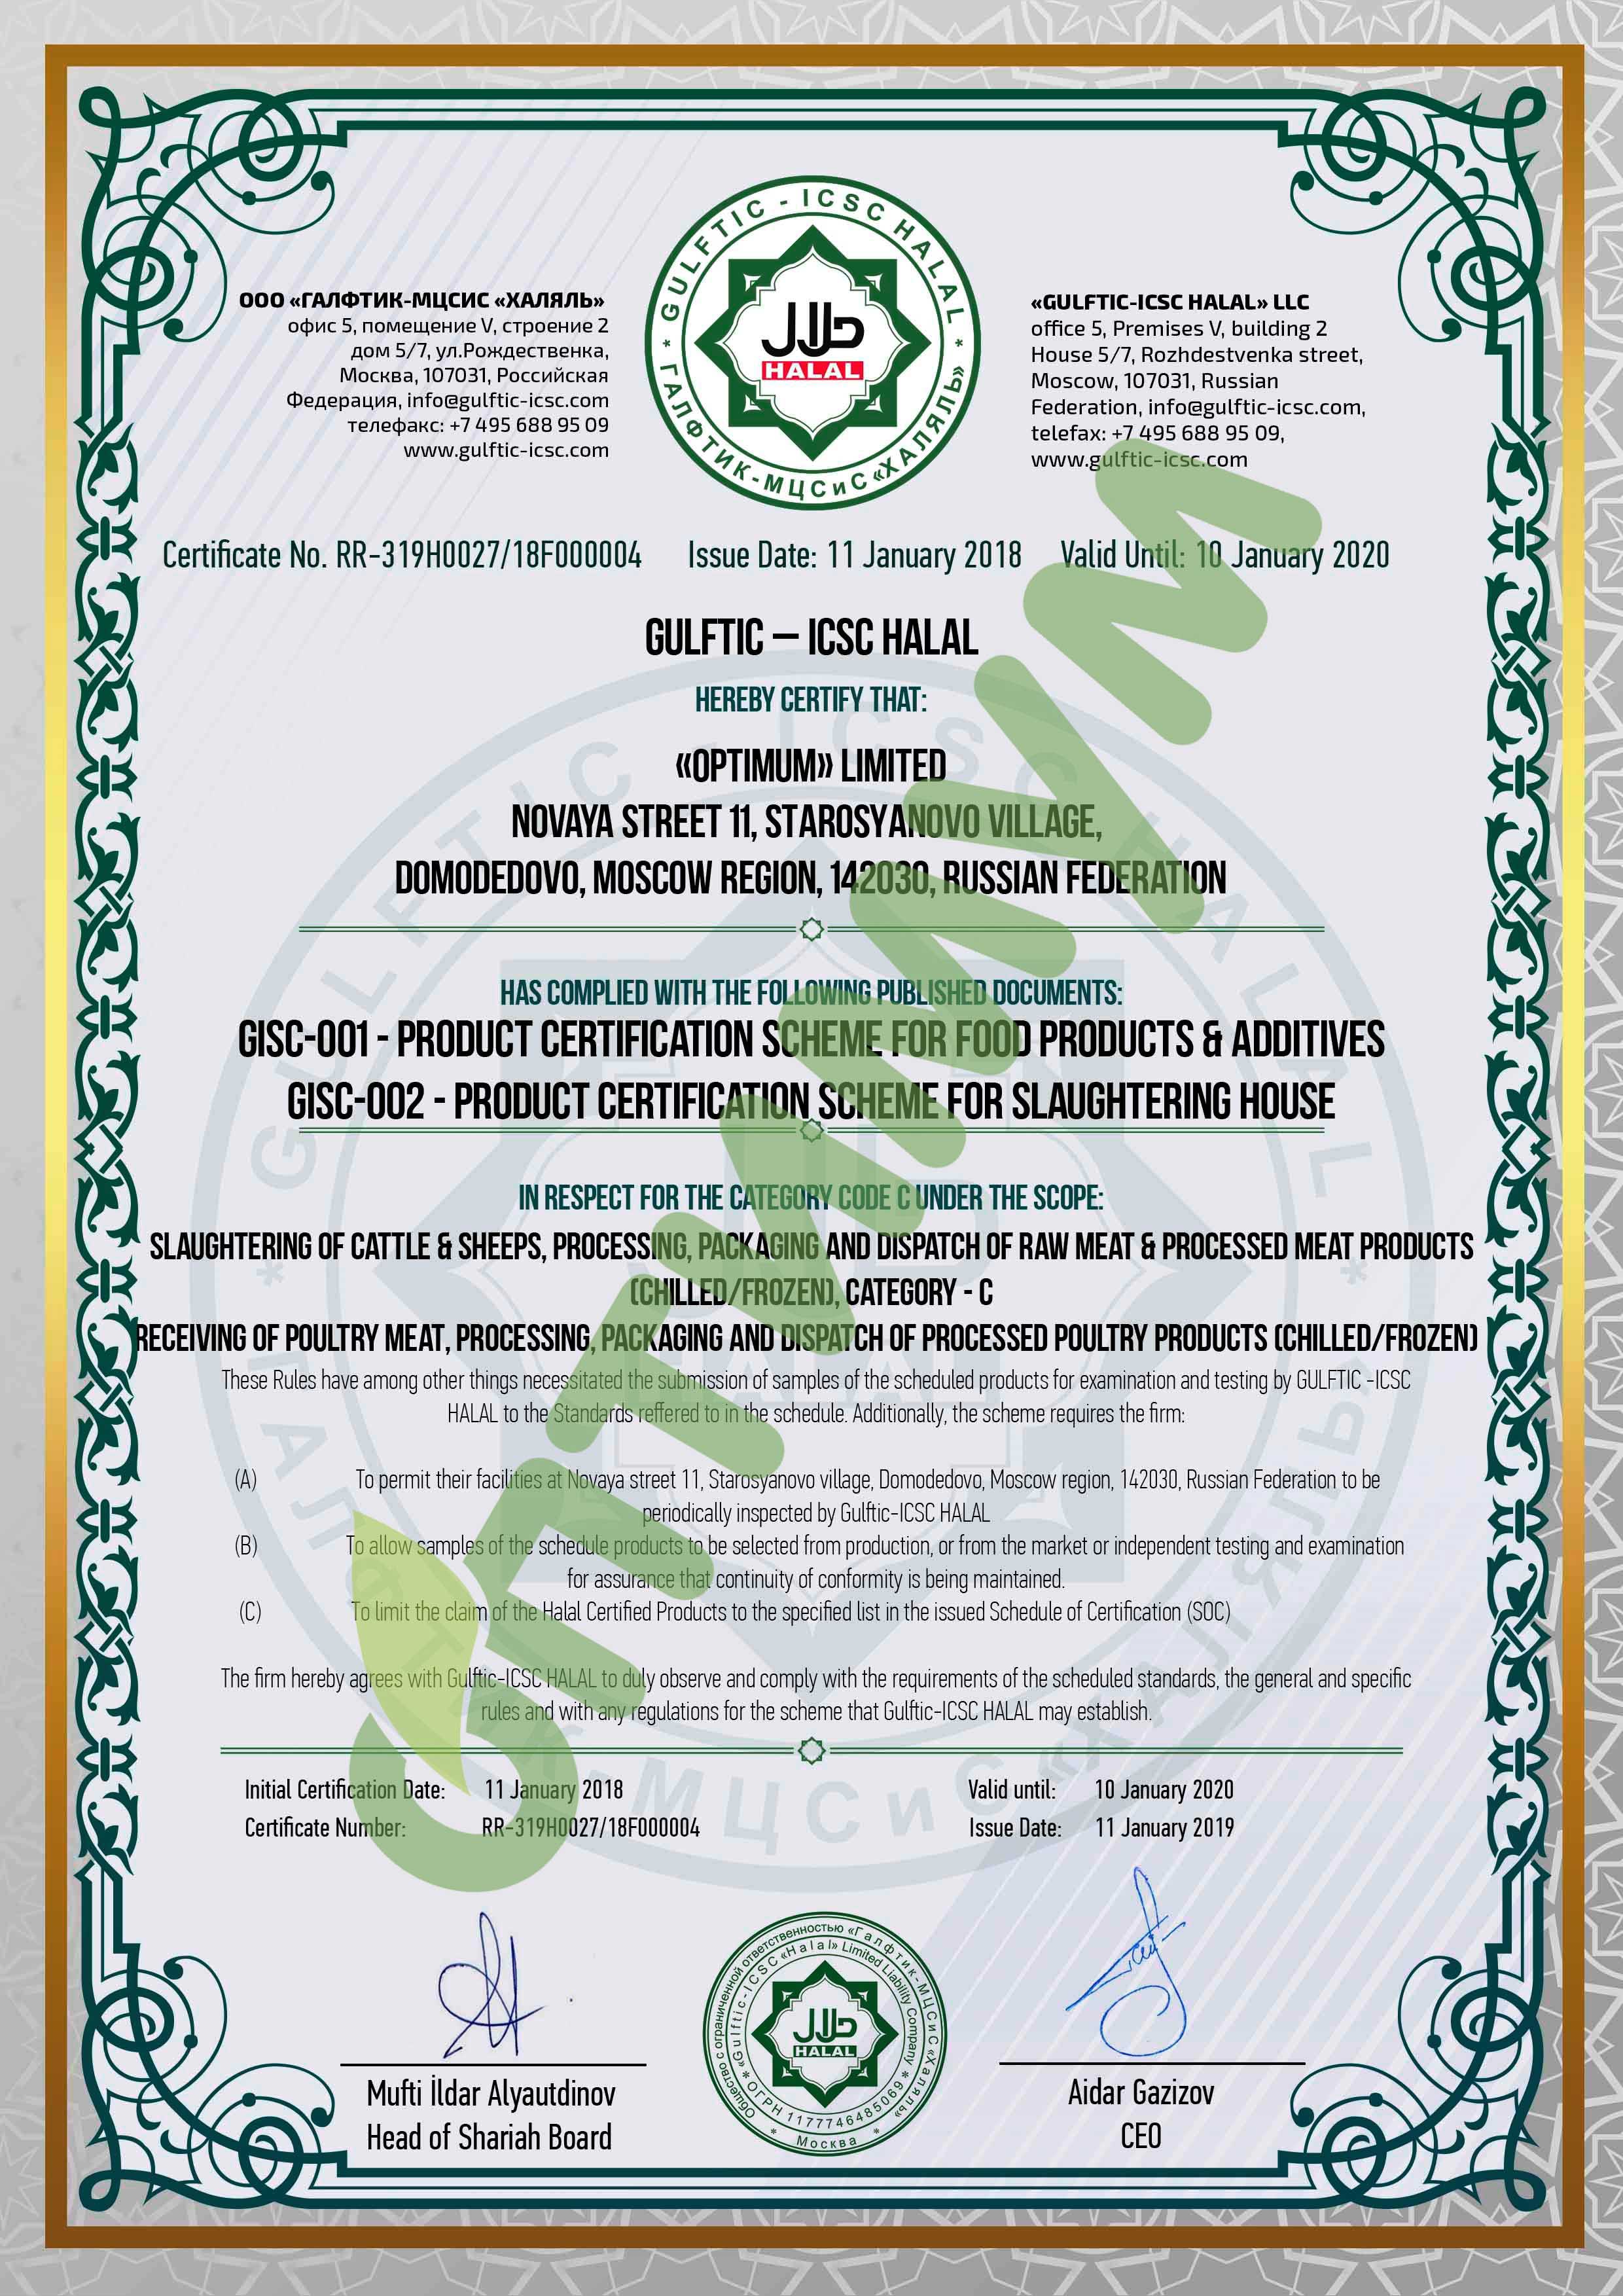 1Halal-Certificate-Optimum-Limited-000004-2019-1